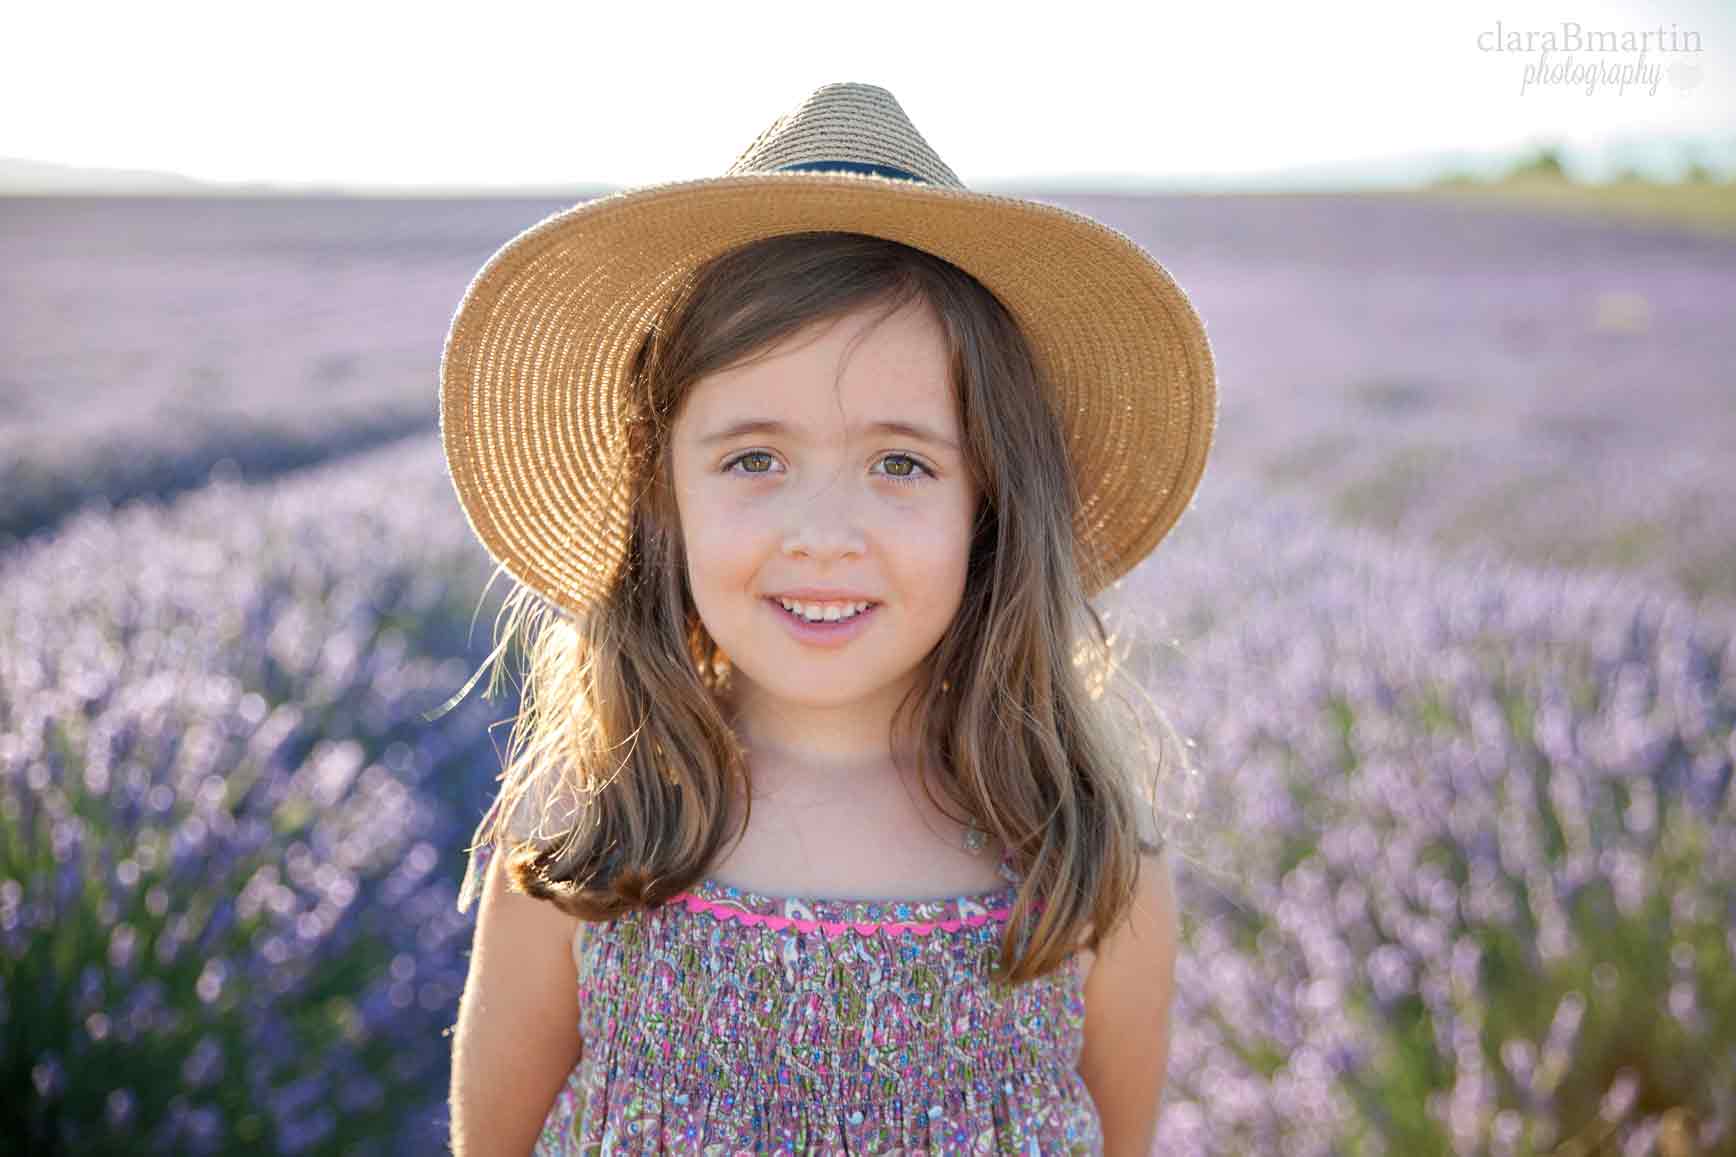 Lavender-fields-Provence-claraBmartin03